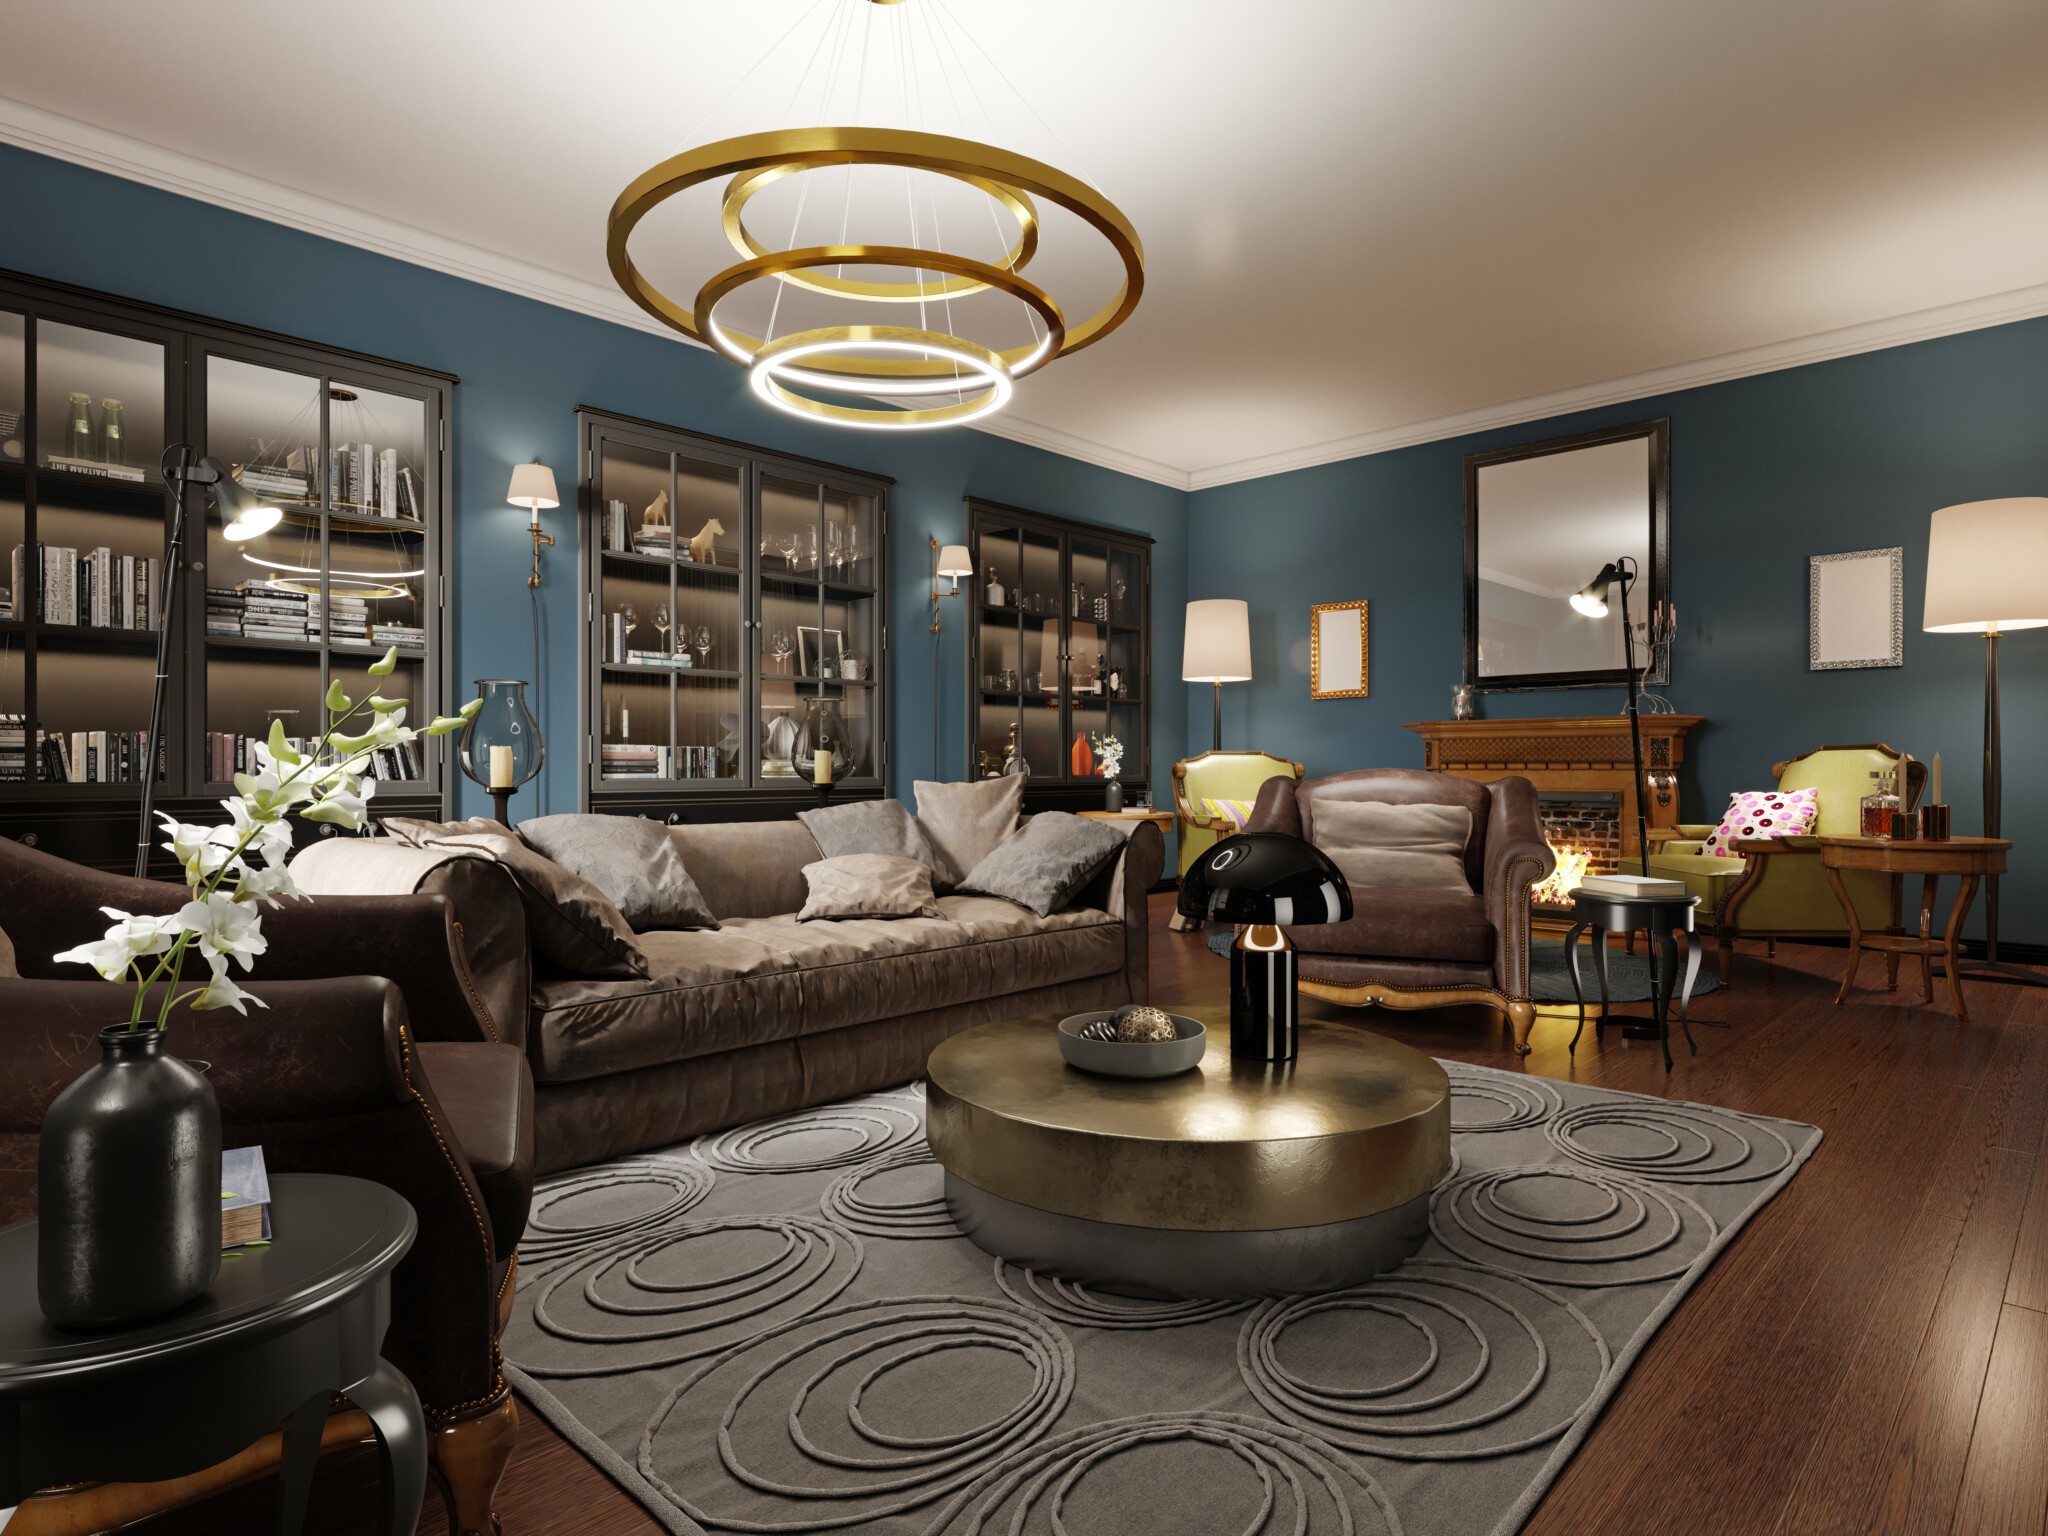 Modern Eclectic Living Room In Dark Colors 2048x1536 